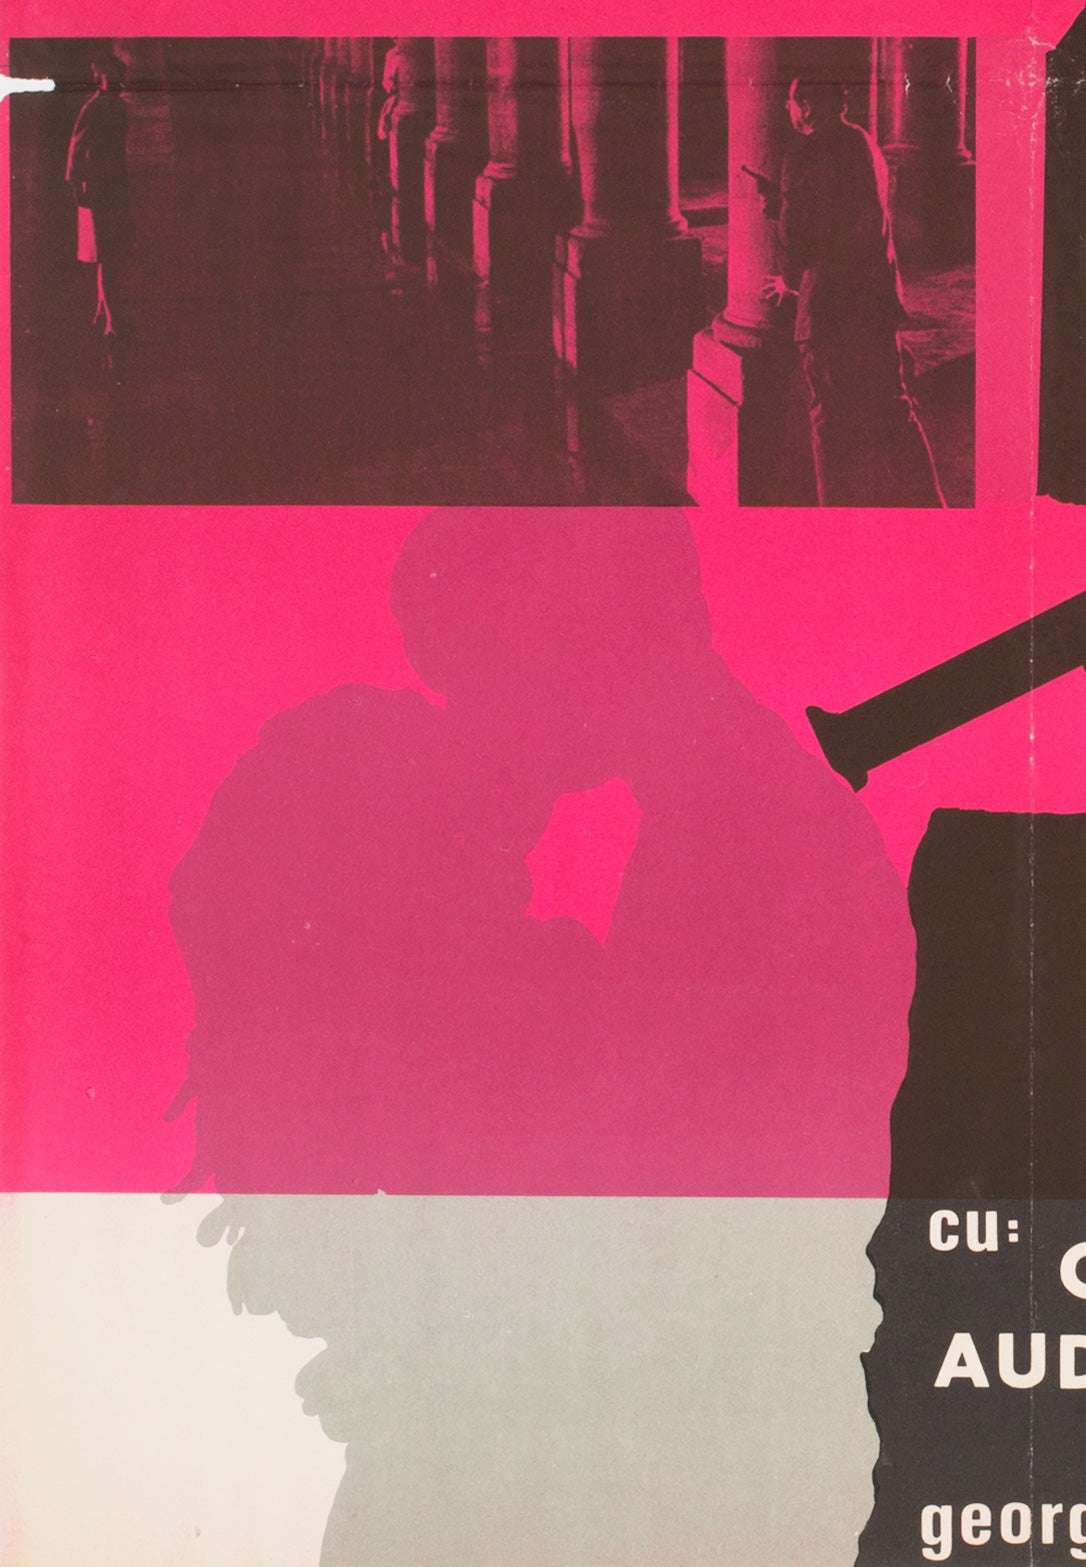 Charade (1963) Original One-Sheet Movie Poster - Original Film Art -  Vintage Movie Posters